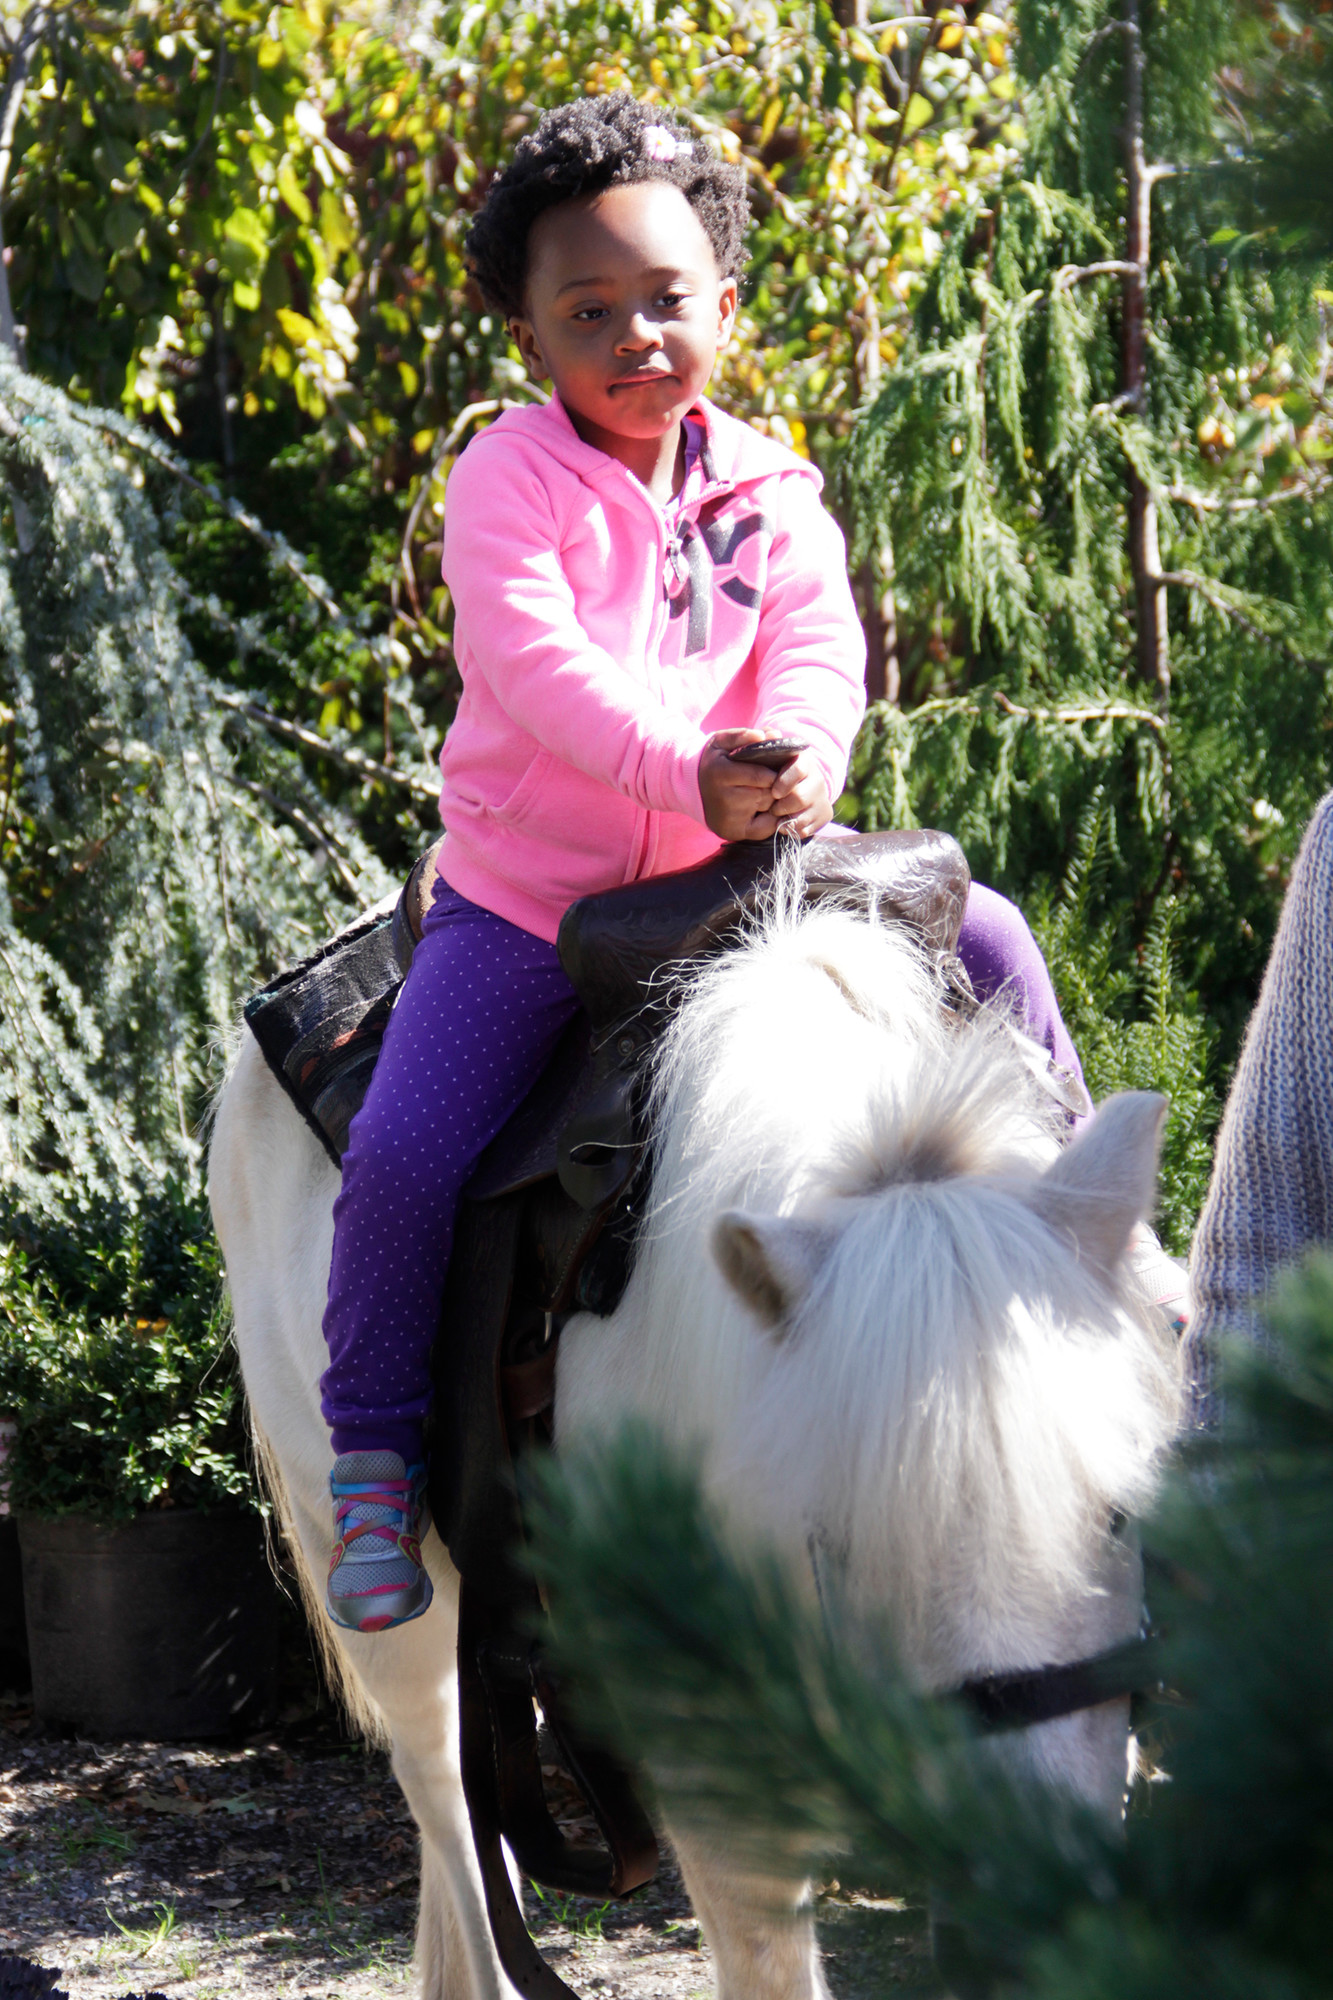 Keagan Love-O’Keefe, 3, rode her way around Cipriano’s gardens.